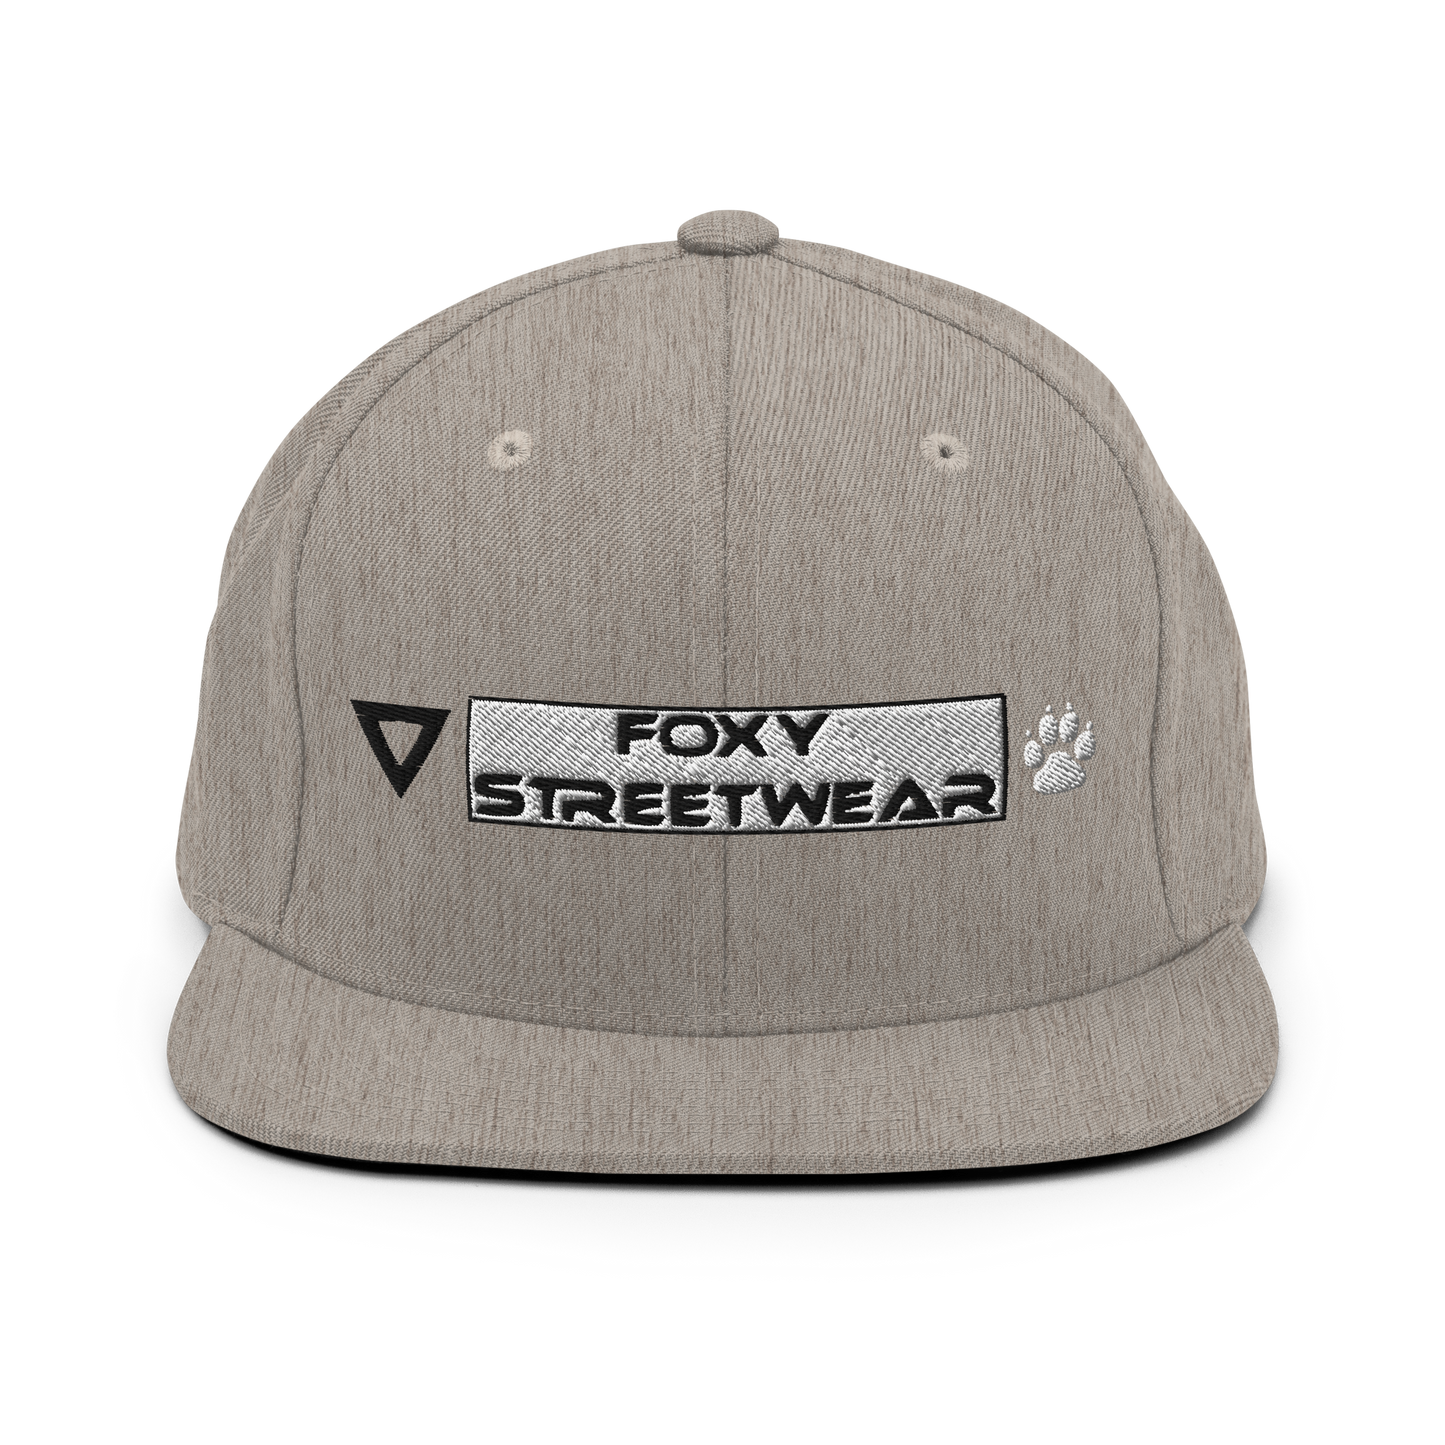 Genesis Fox Logo Snapback